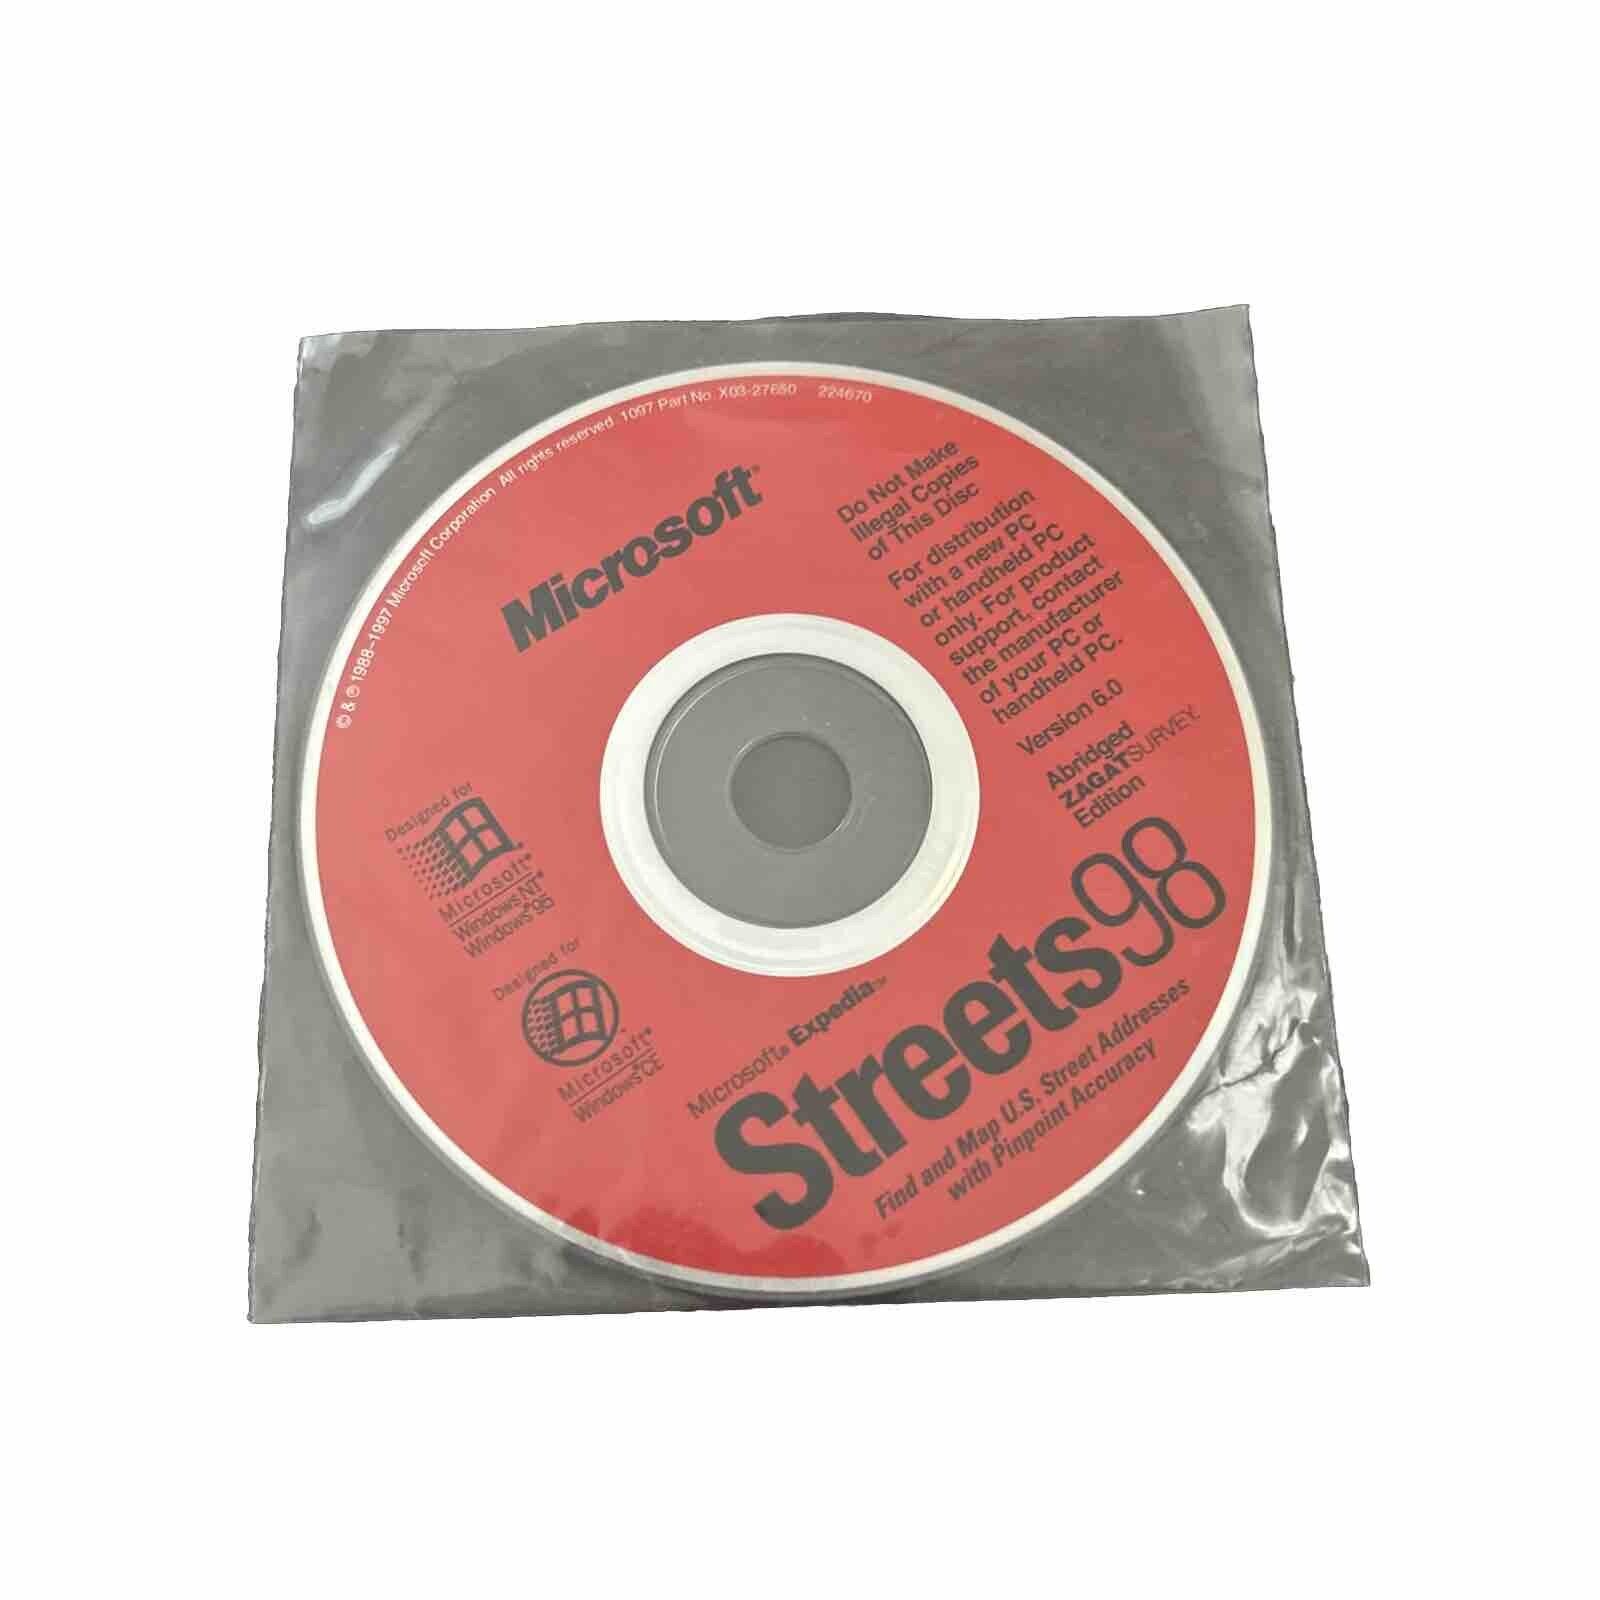 Microsoft Expedia Streets 98 (CD-ROM) Find & Map U.S. Street Addresses Windows